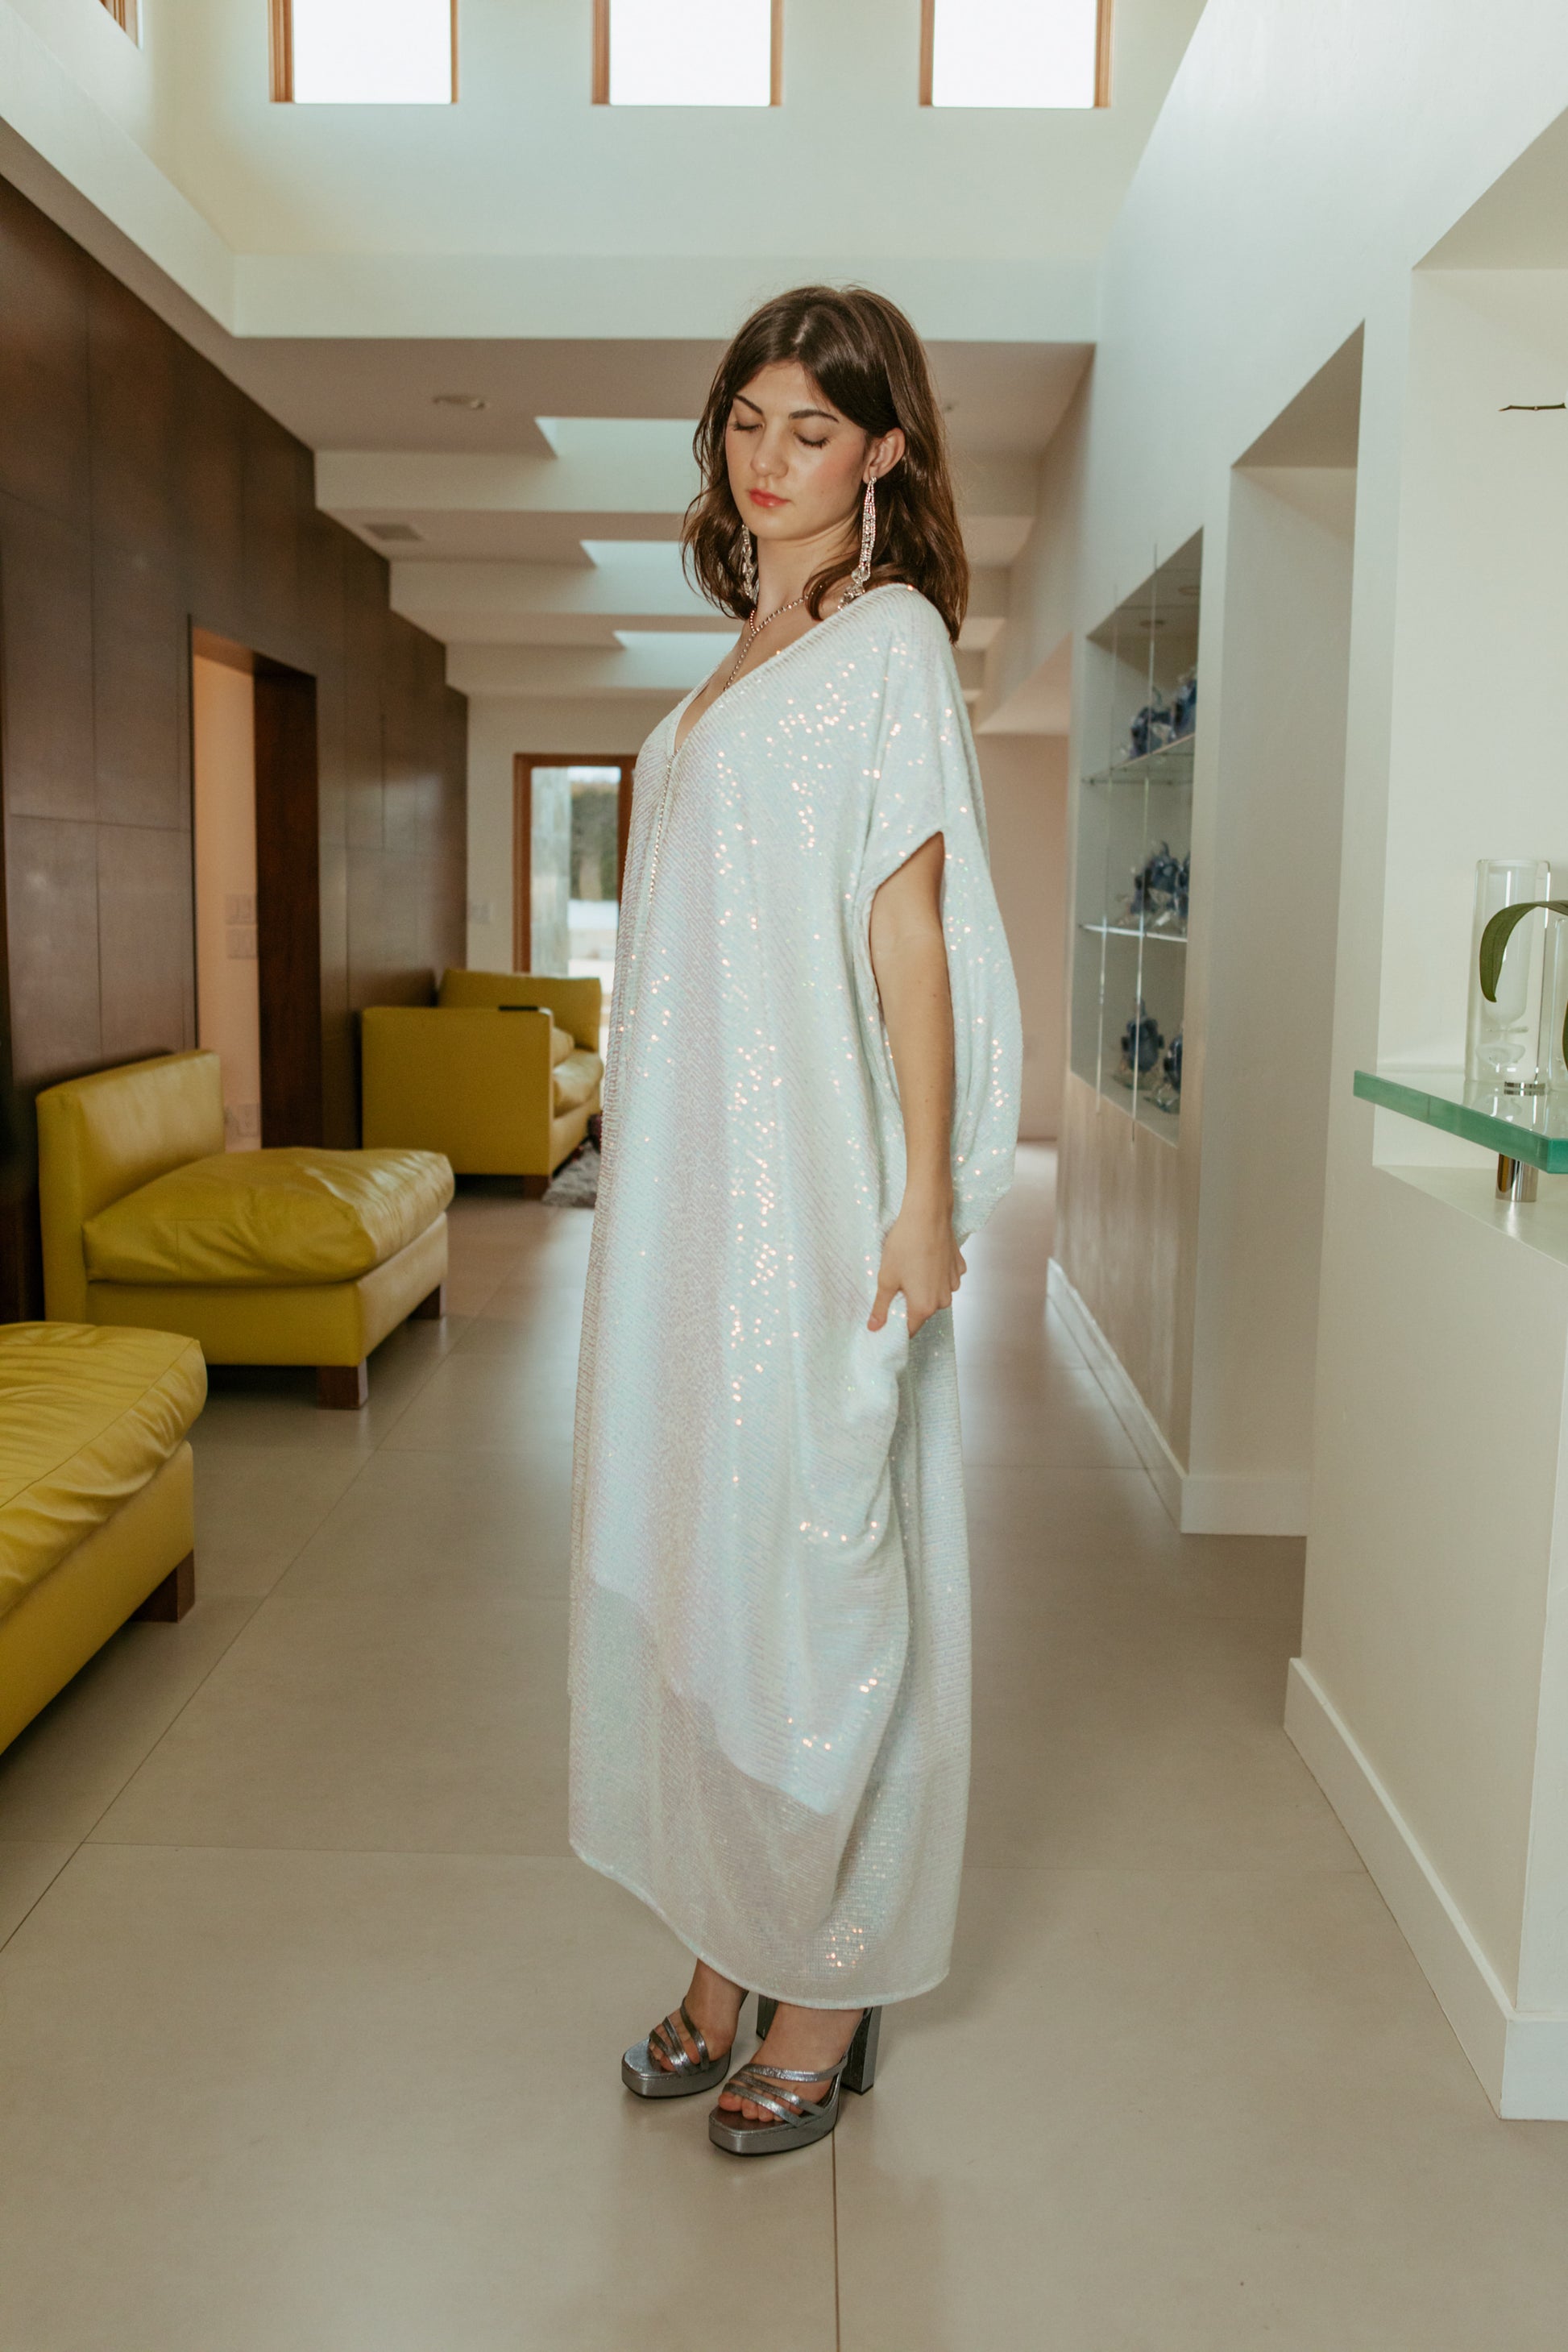 Semi-sheer, lined, shimmering sequin caftan dress in radiant ivory white. Elegant bohemian in style.